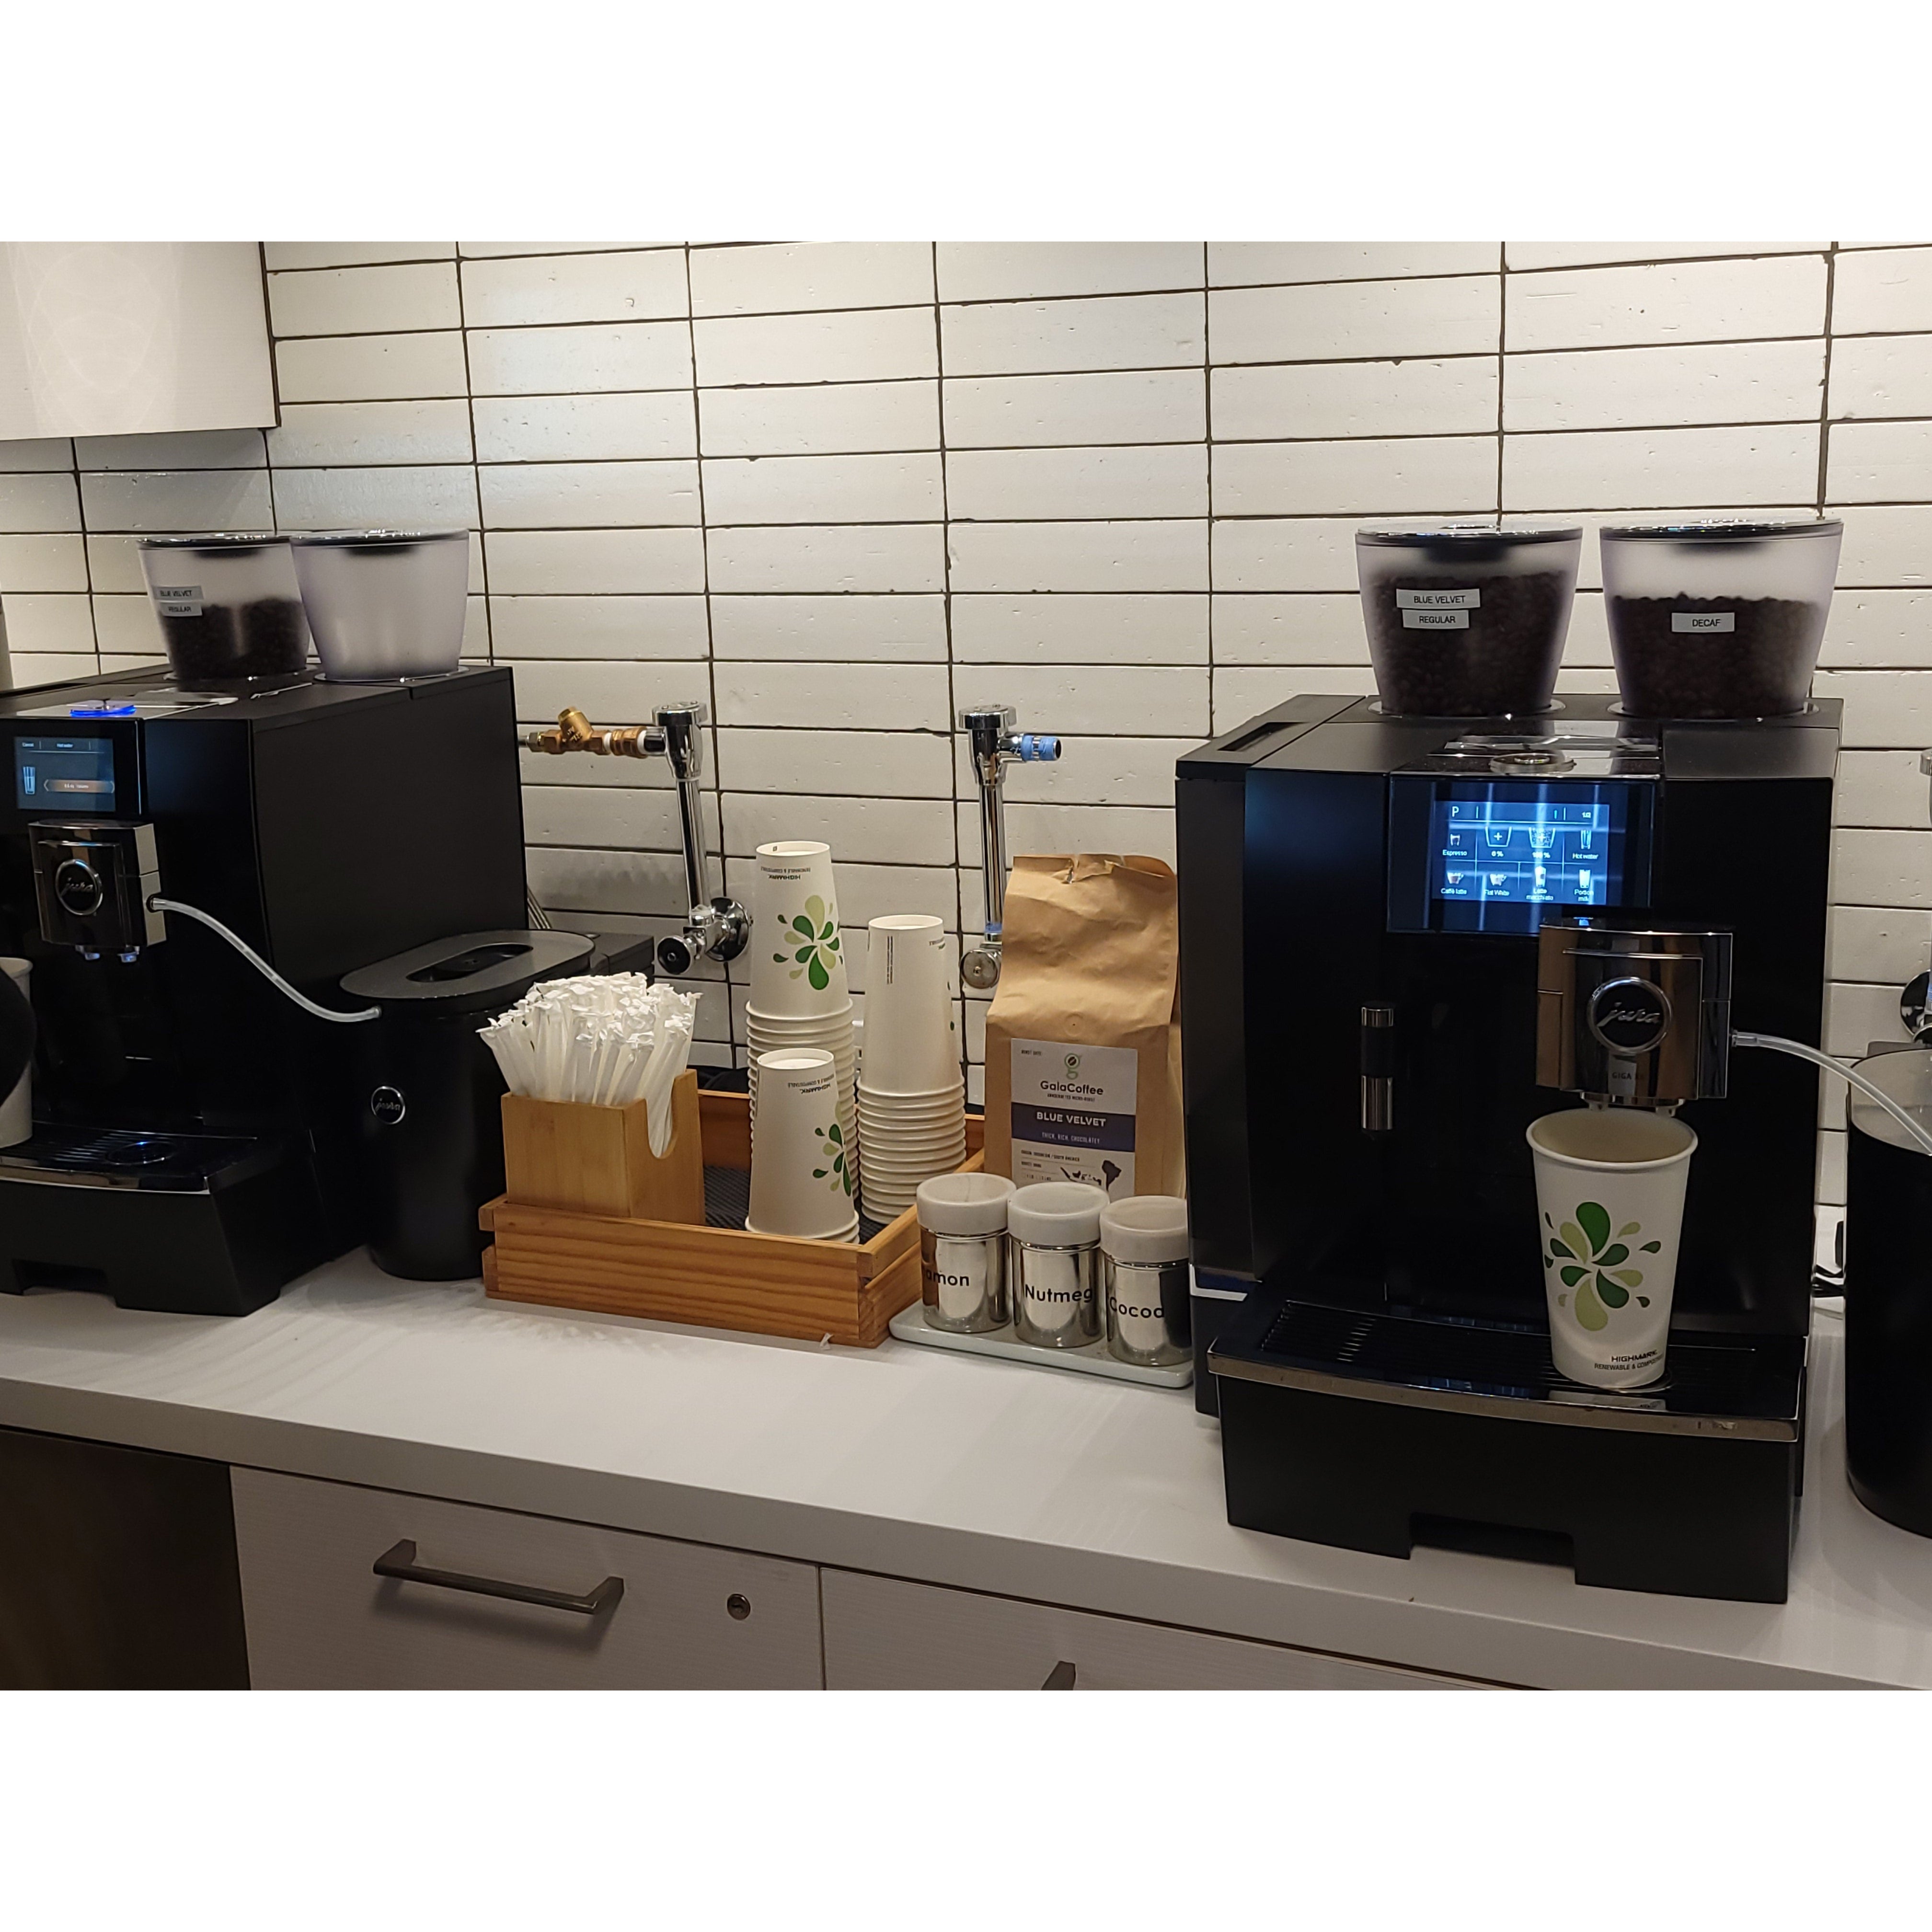 Jura GIGA X8 Professional Coffee Machine